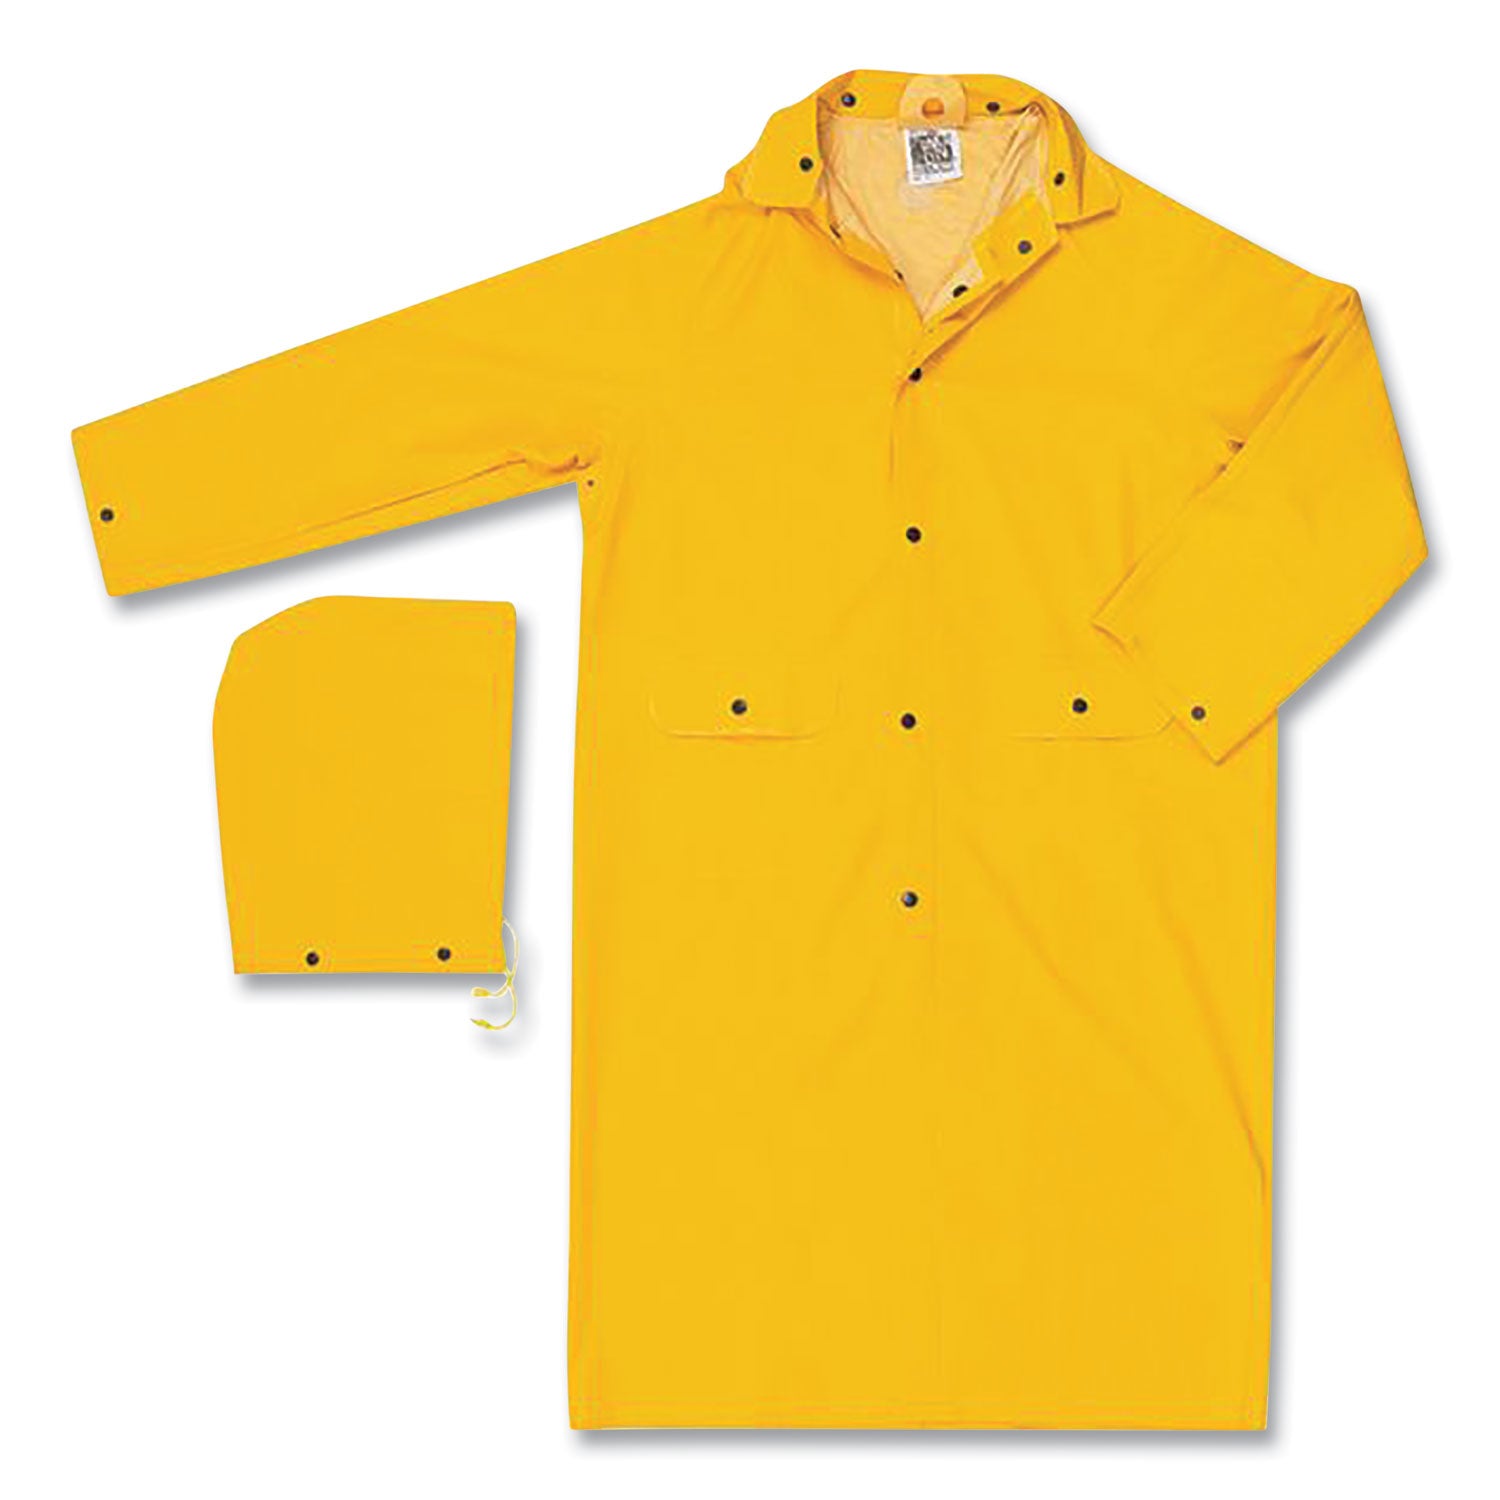 200c-yellow-classic-rain-coat-large_rvr200cl - 1